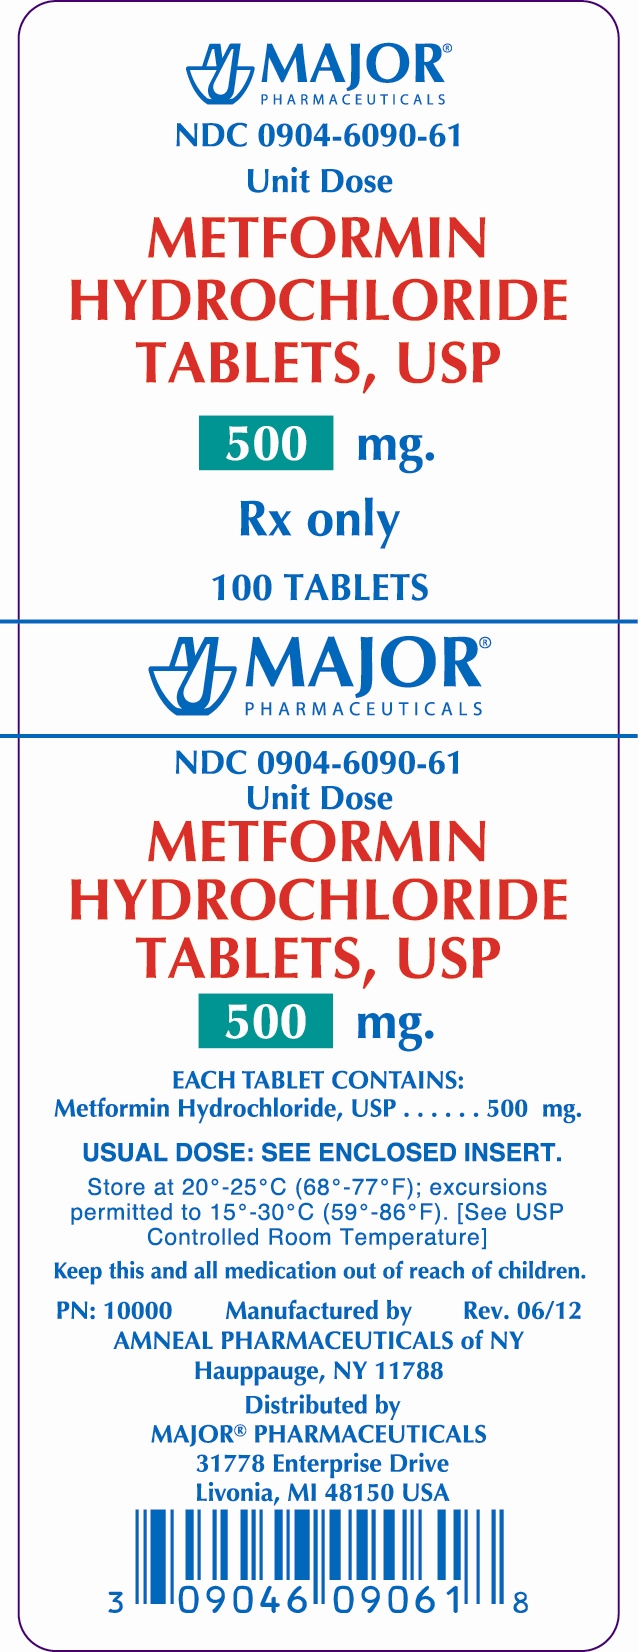 METFORMIN HYDROCHLORIDE TABLETS, USP 500MG